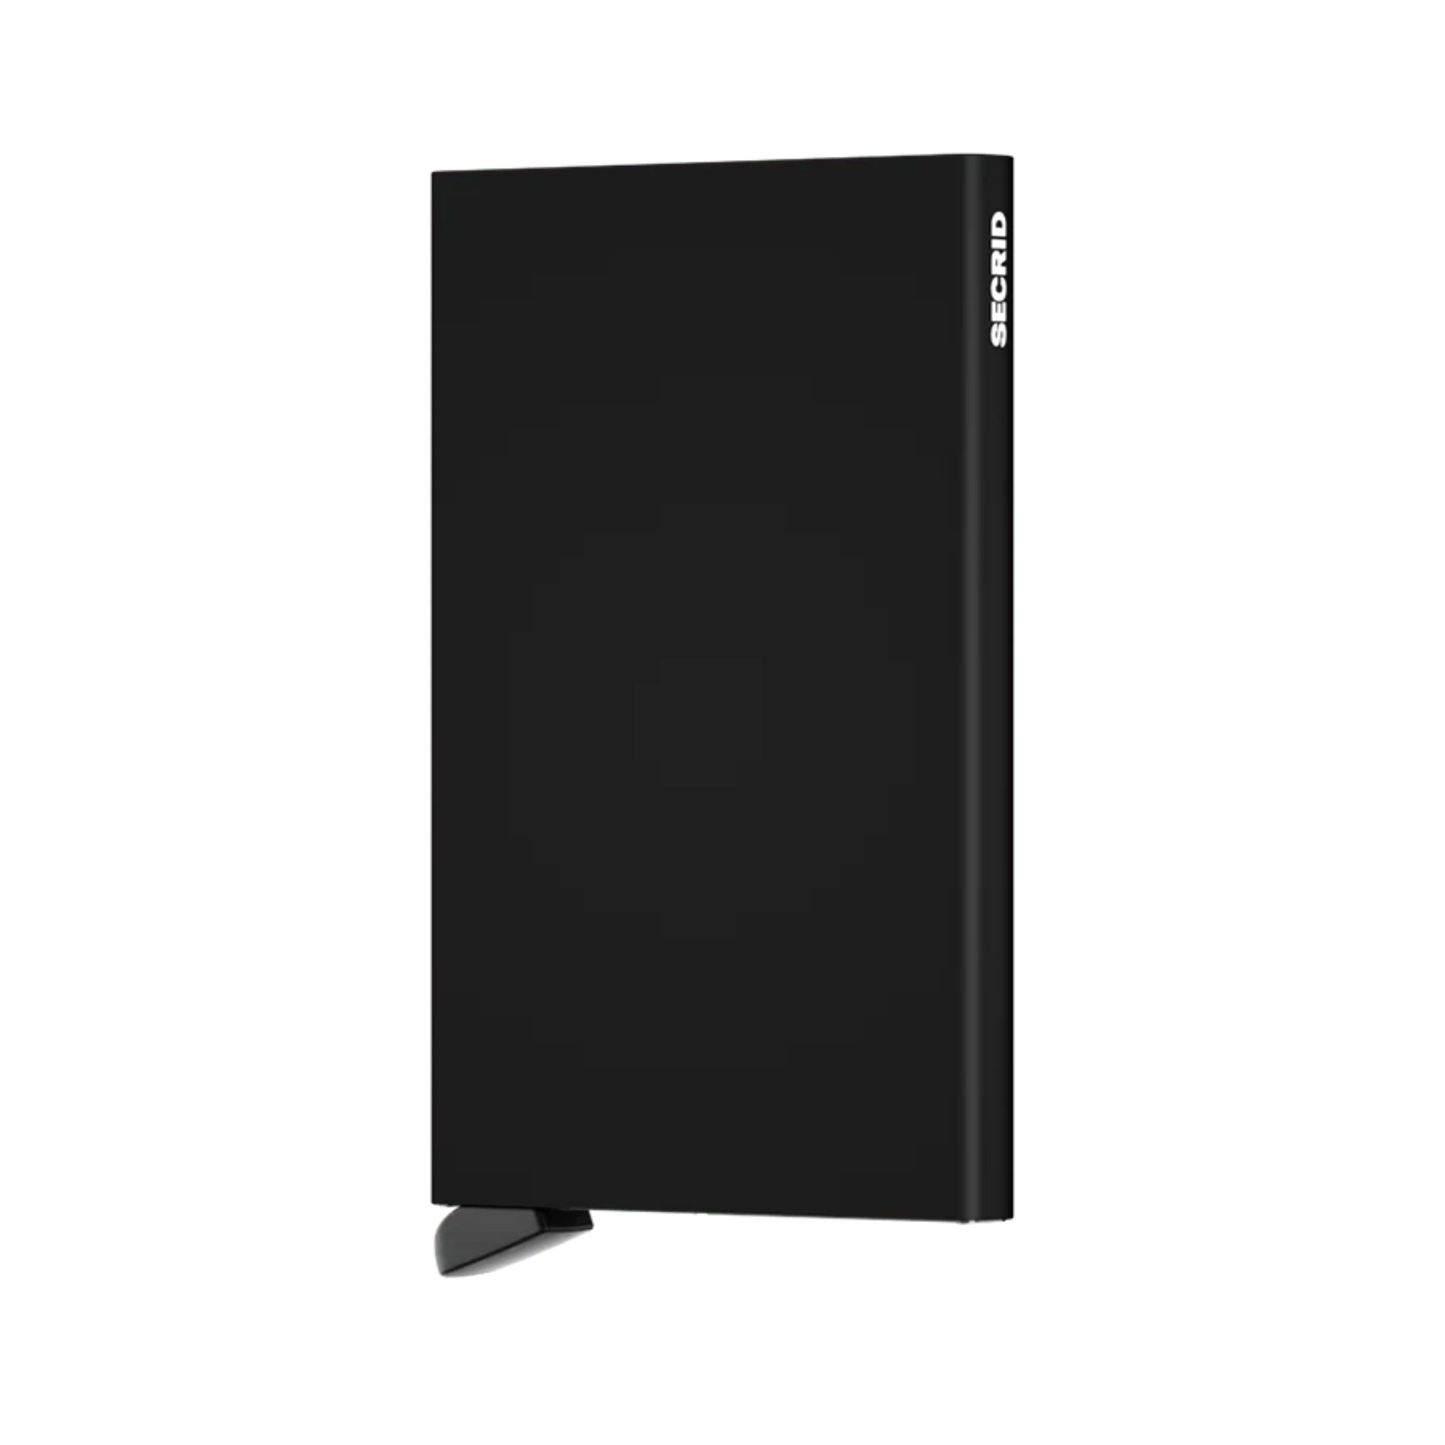 Metallic black rectangular wallet with black bottom tab and small white logo on side.